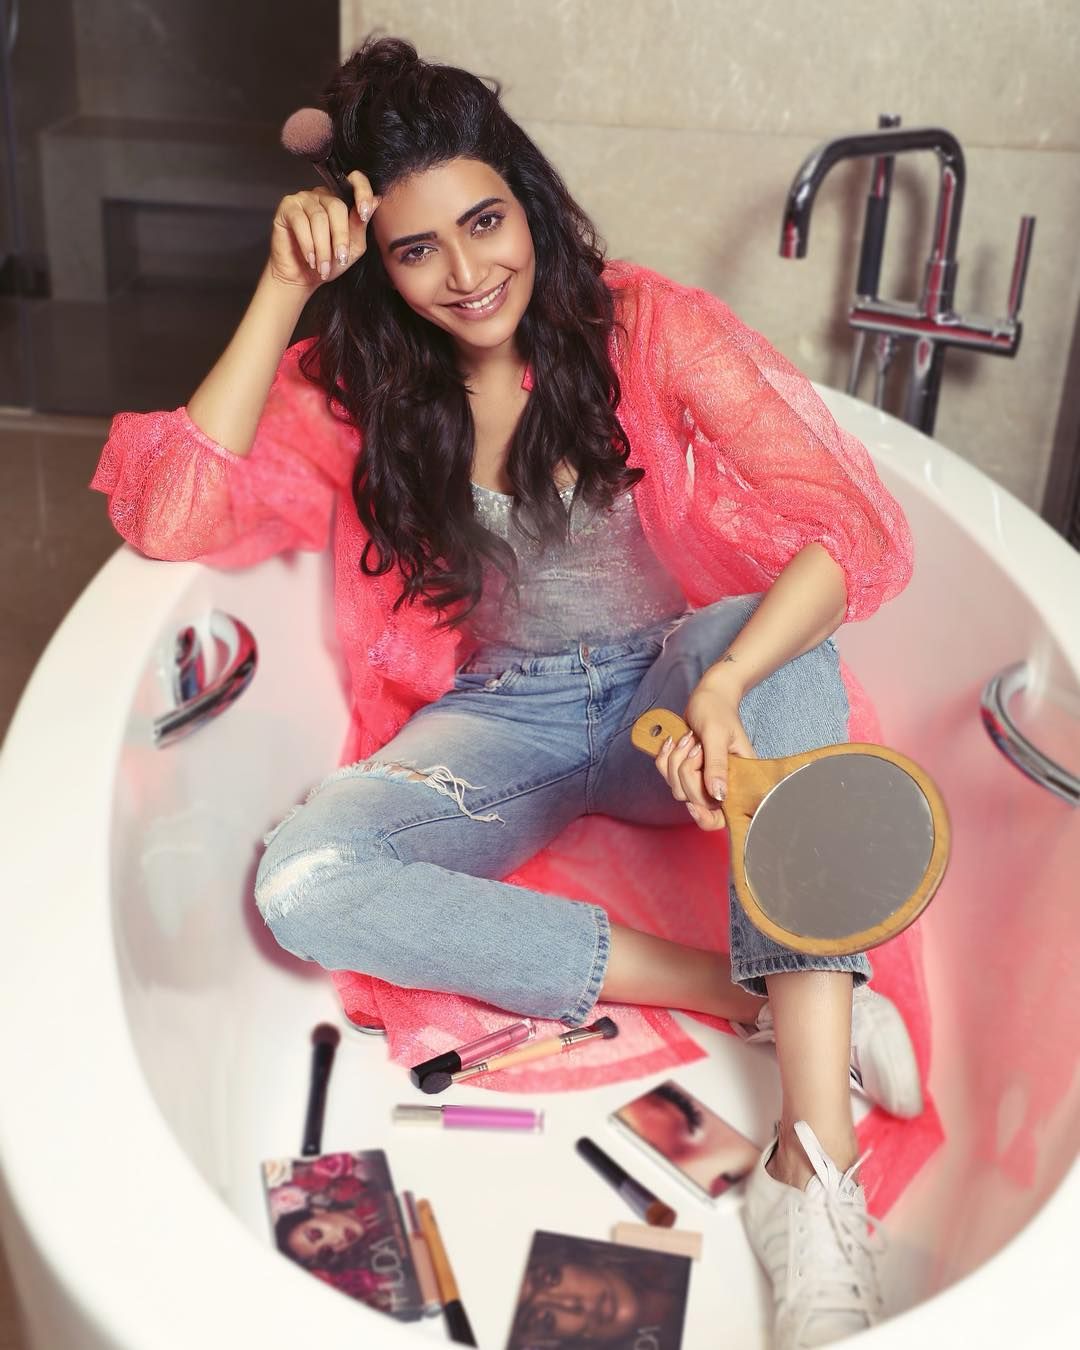 Erica Fernandes, Hina Khan, Karishma Tanna’s Bathroom Snaps Are Too Hot To Handle! 5